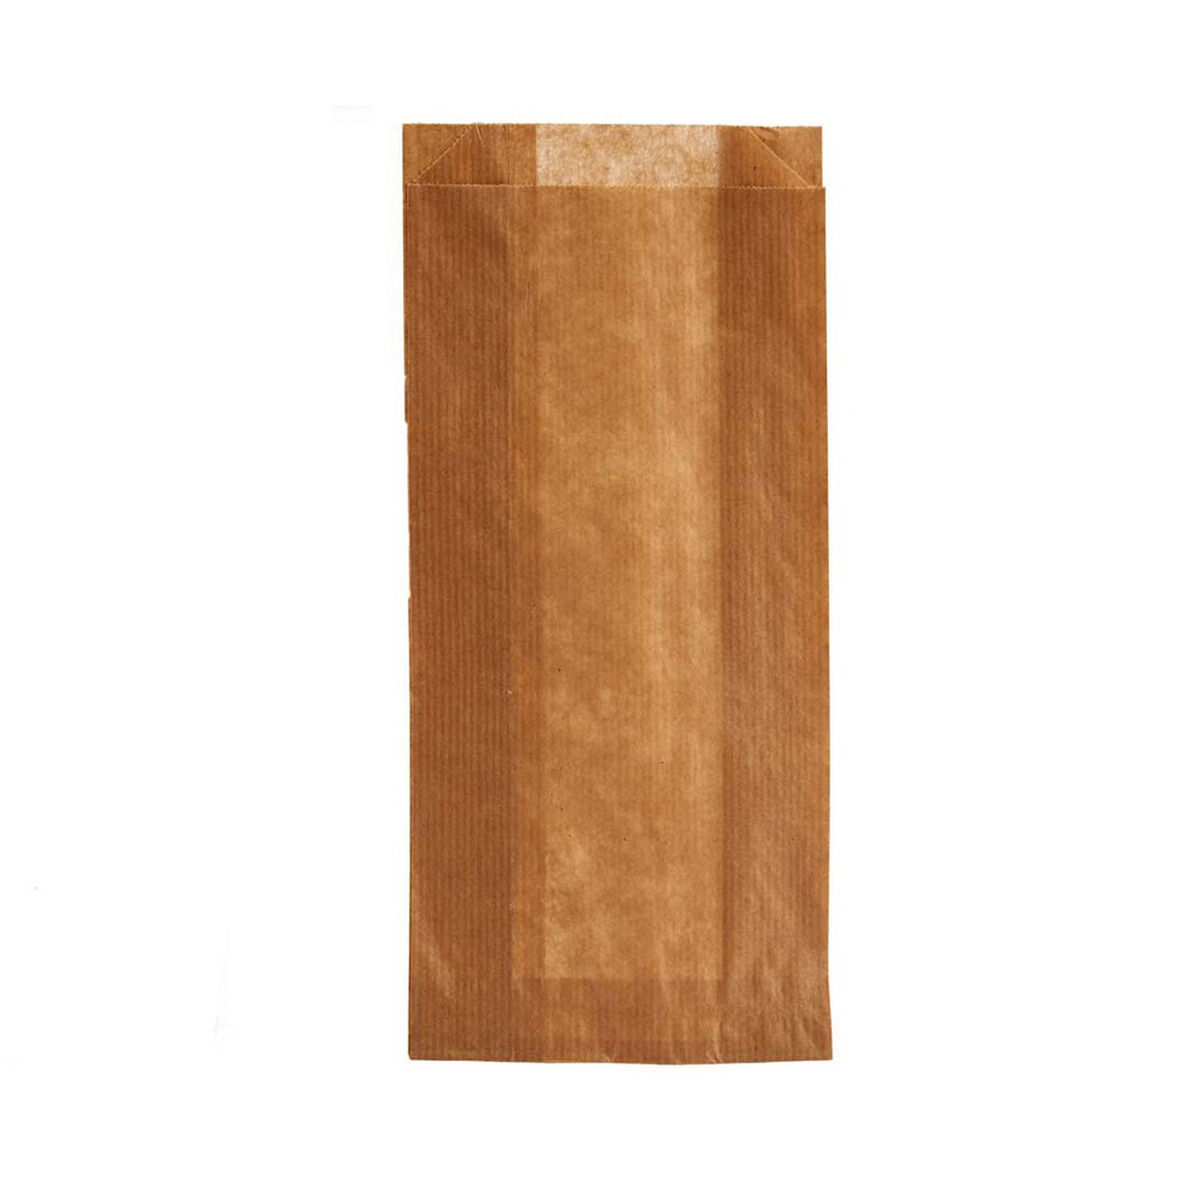 Protective Food Wrap Bag Cellulose (20 pcs)